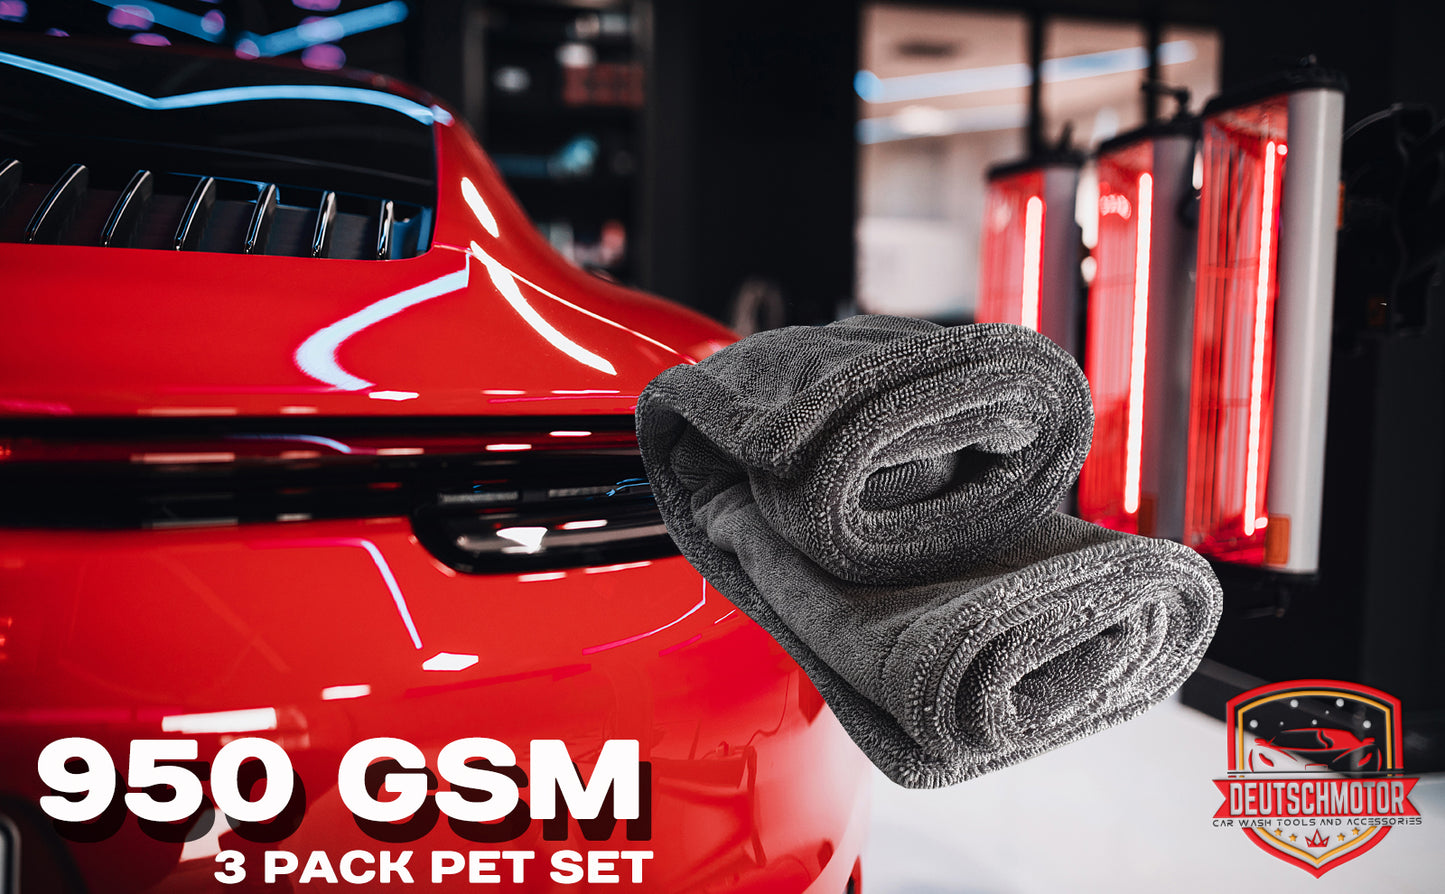 Deutschmotor 1600 GSM super fast drying towels - car wash essentials